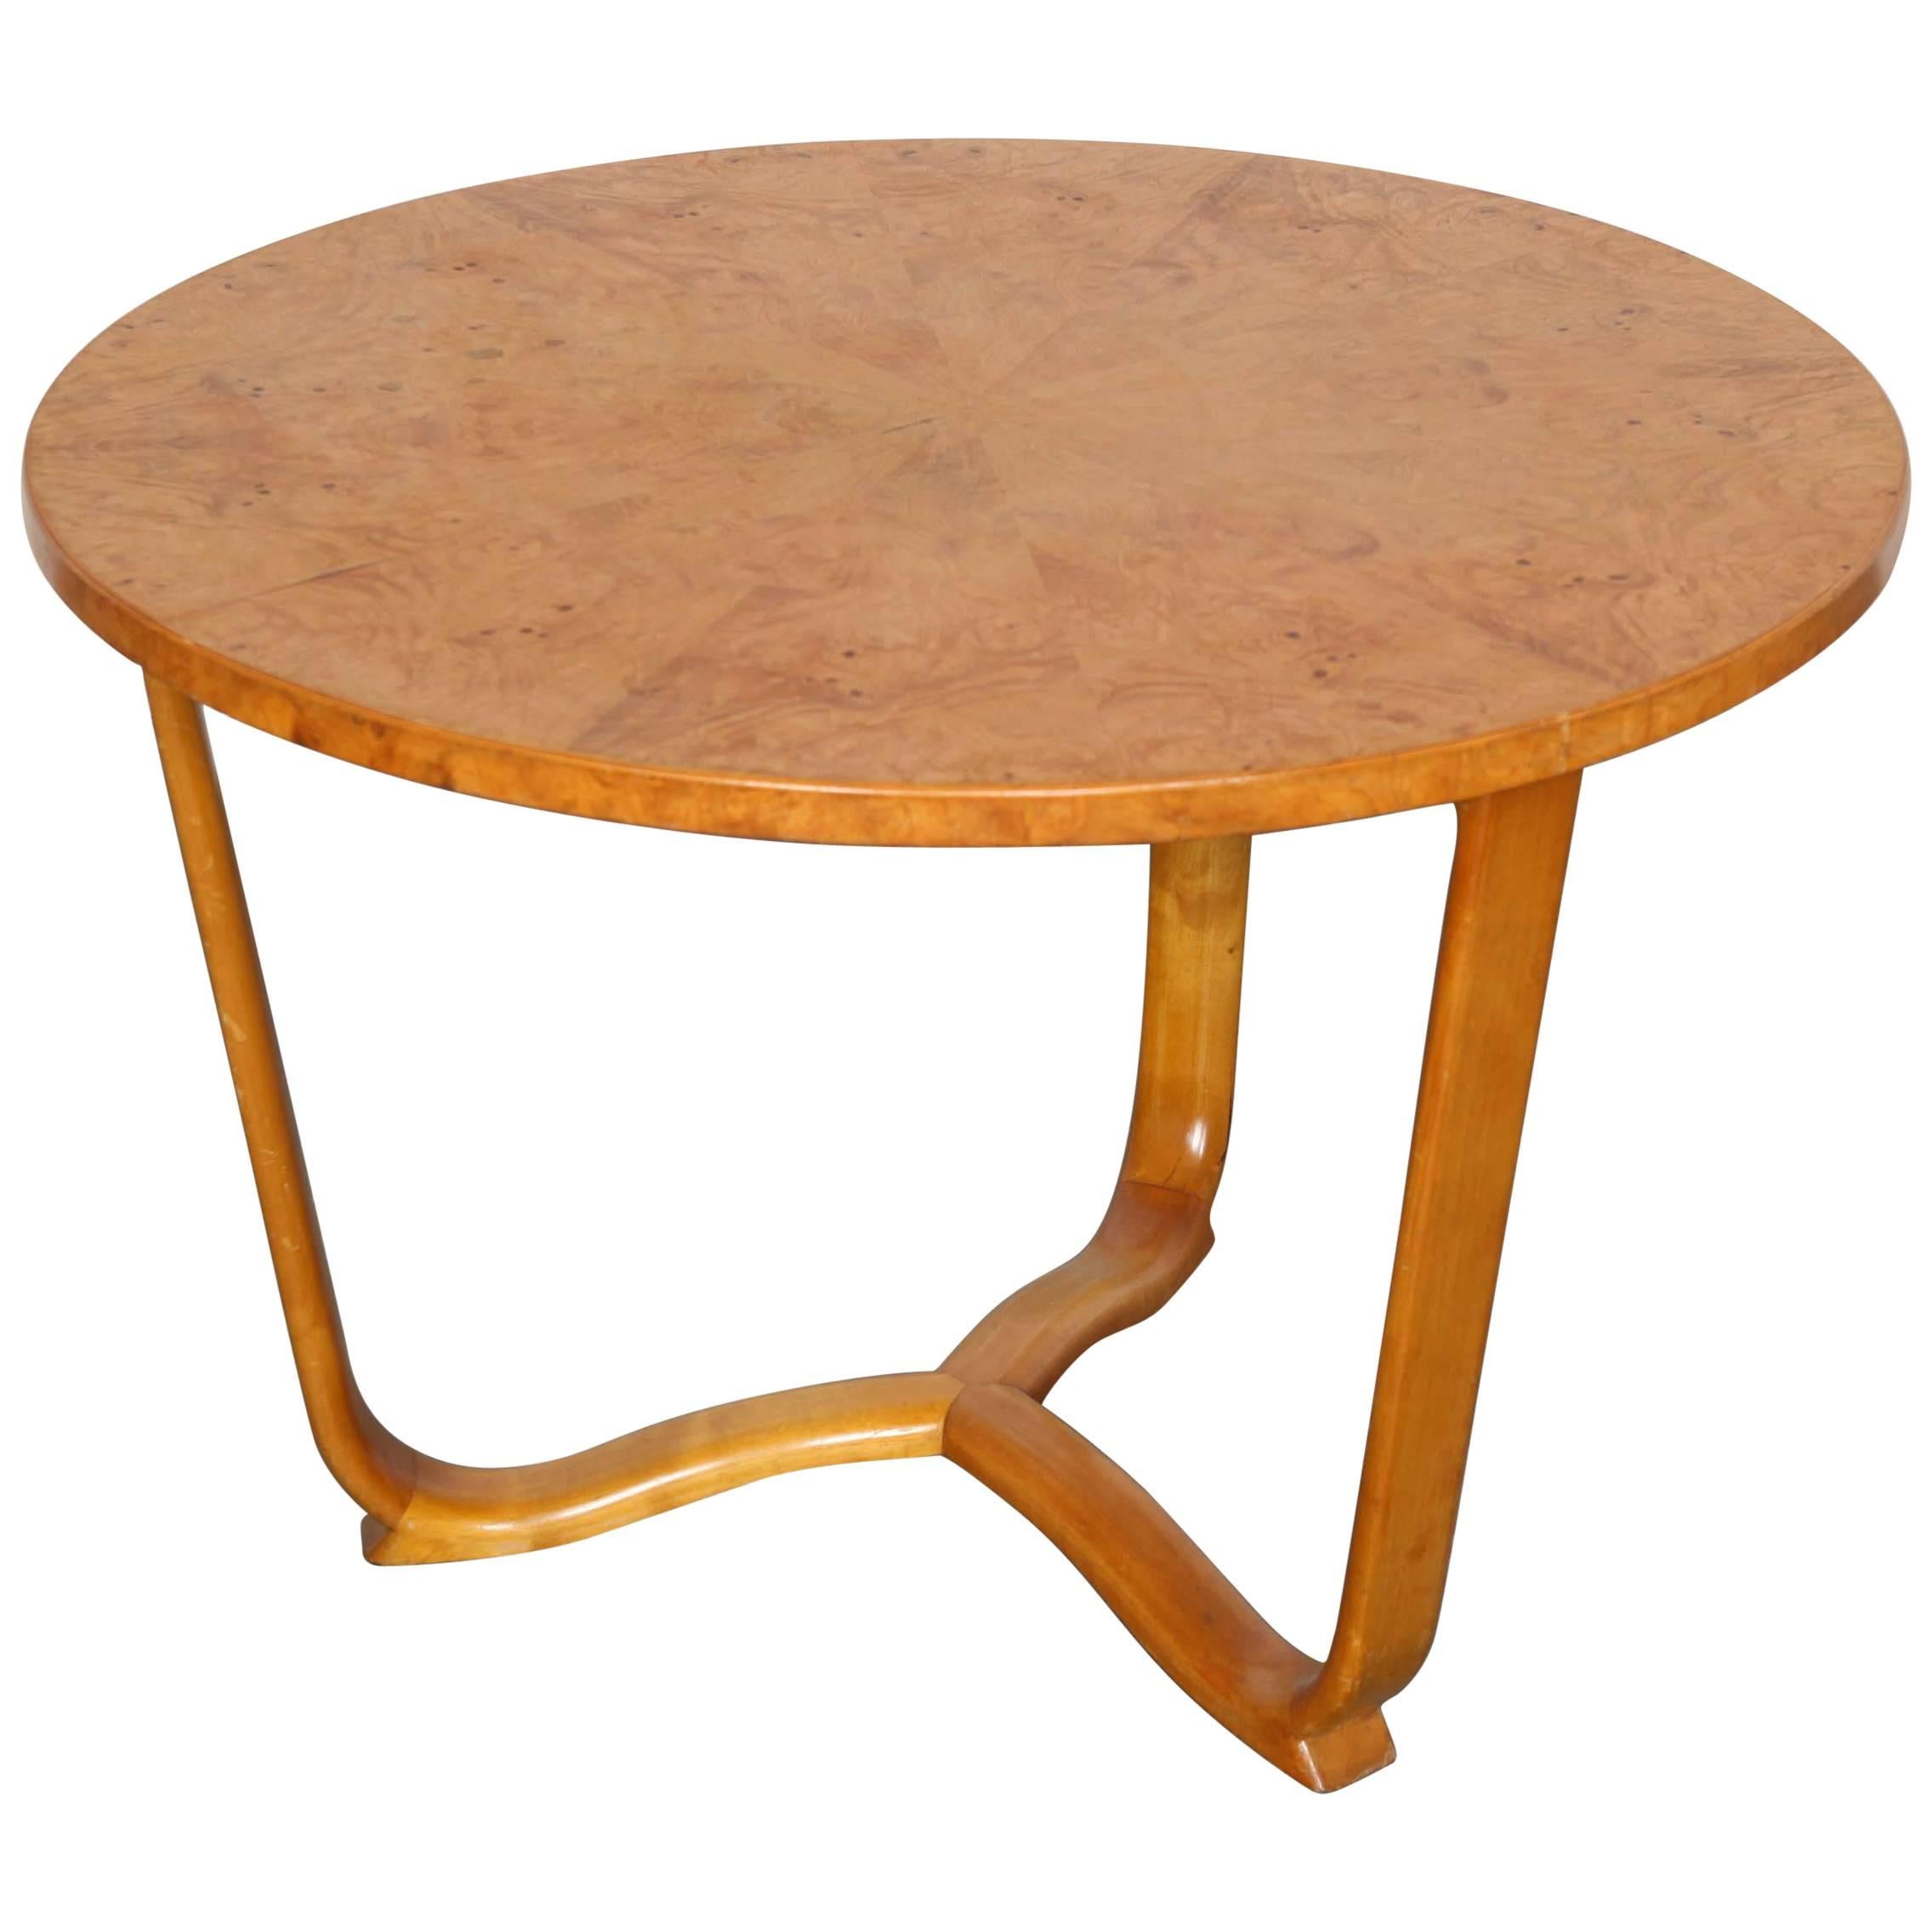 Midcentury Burl Wood Coffee Table with Bent Legs